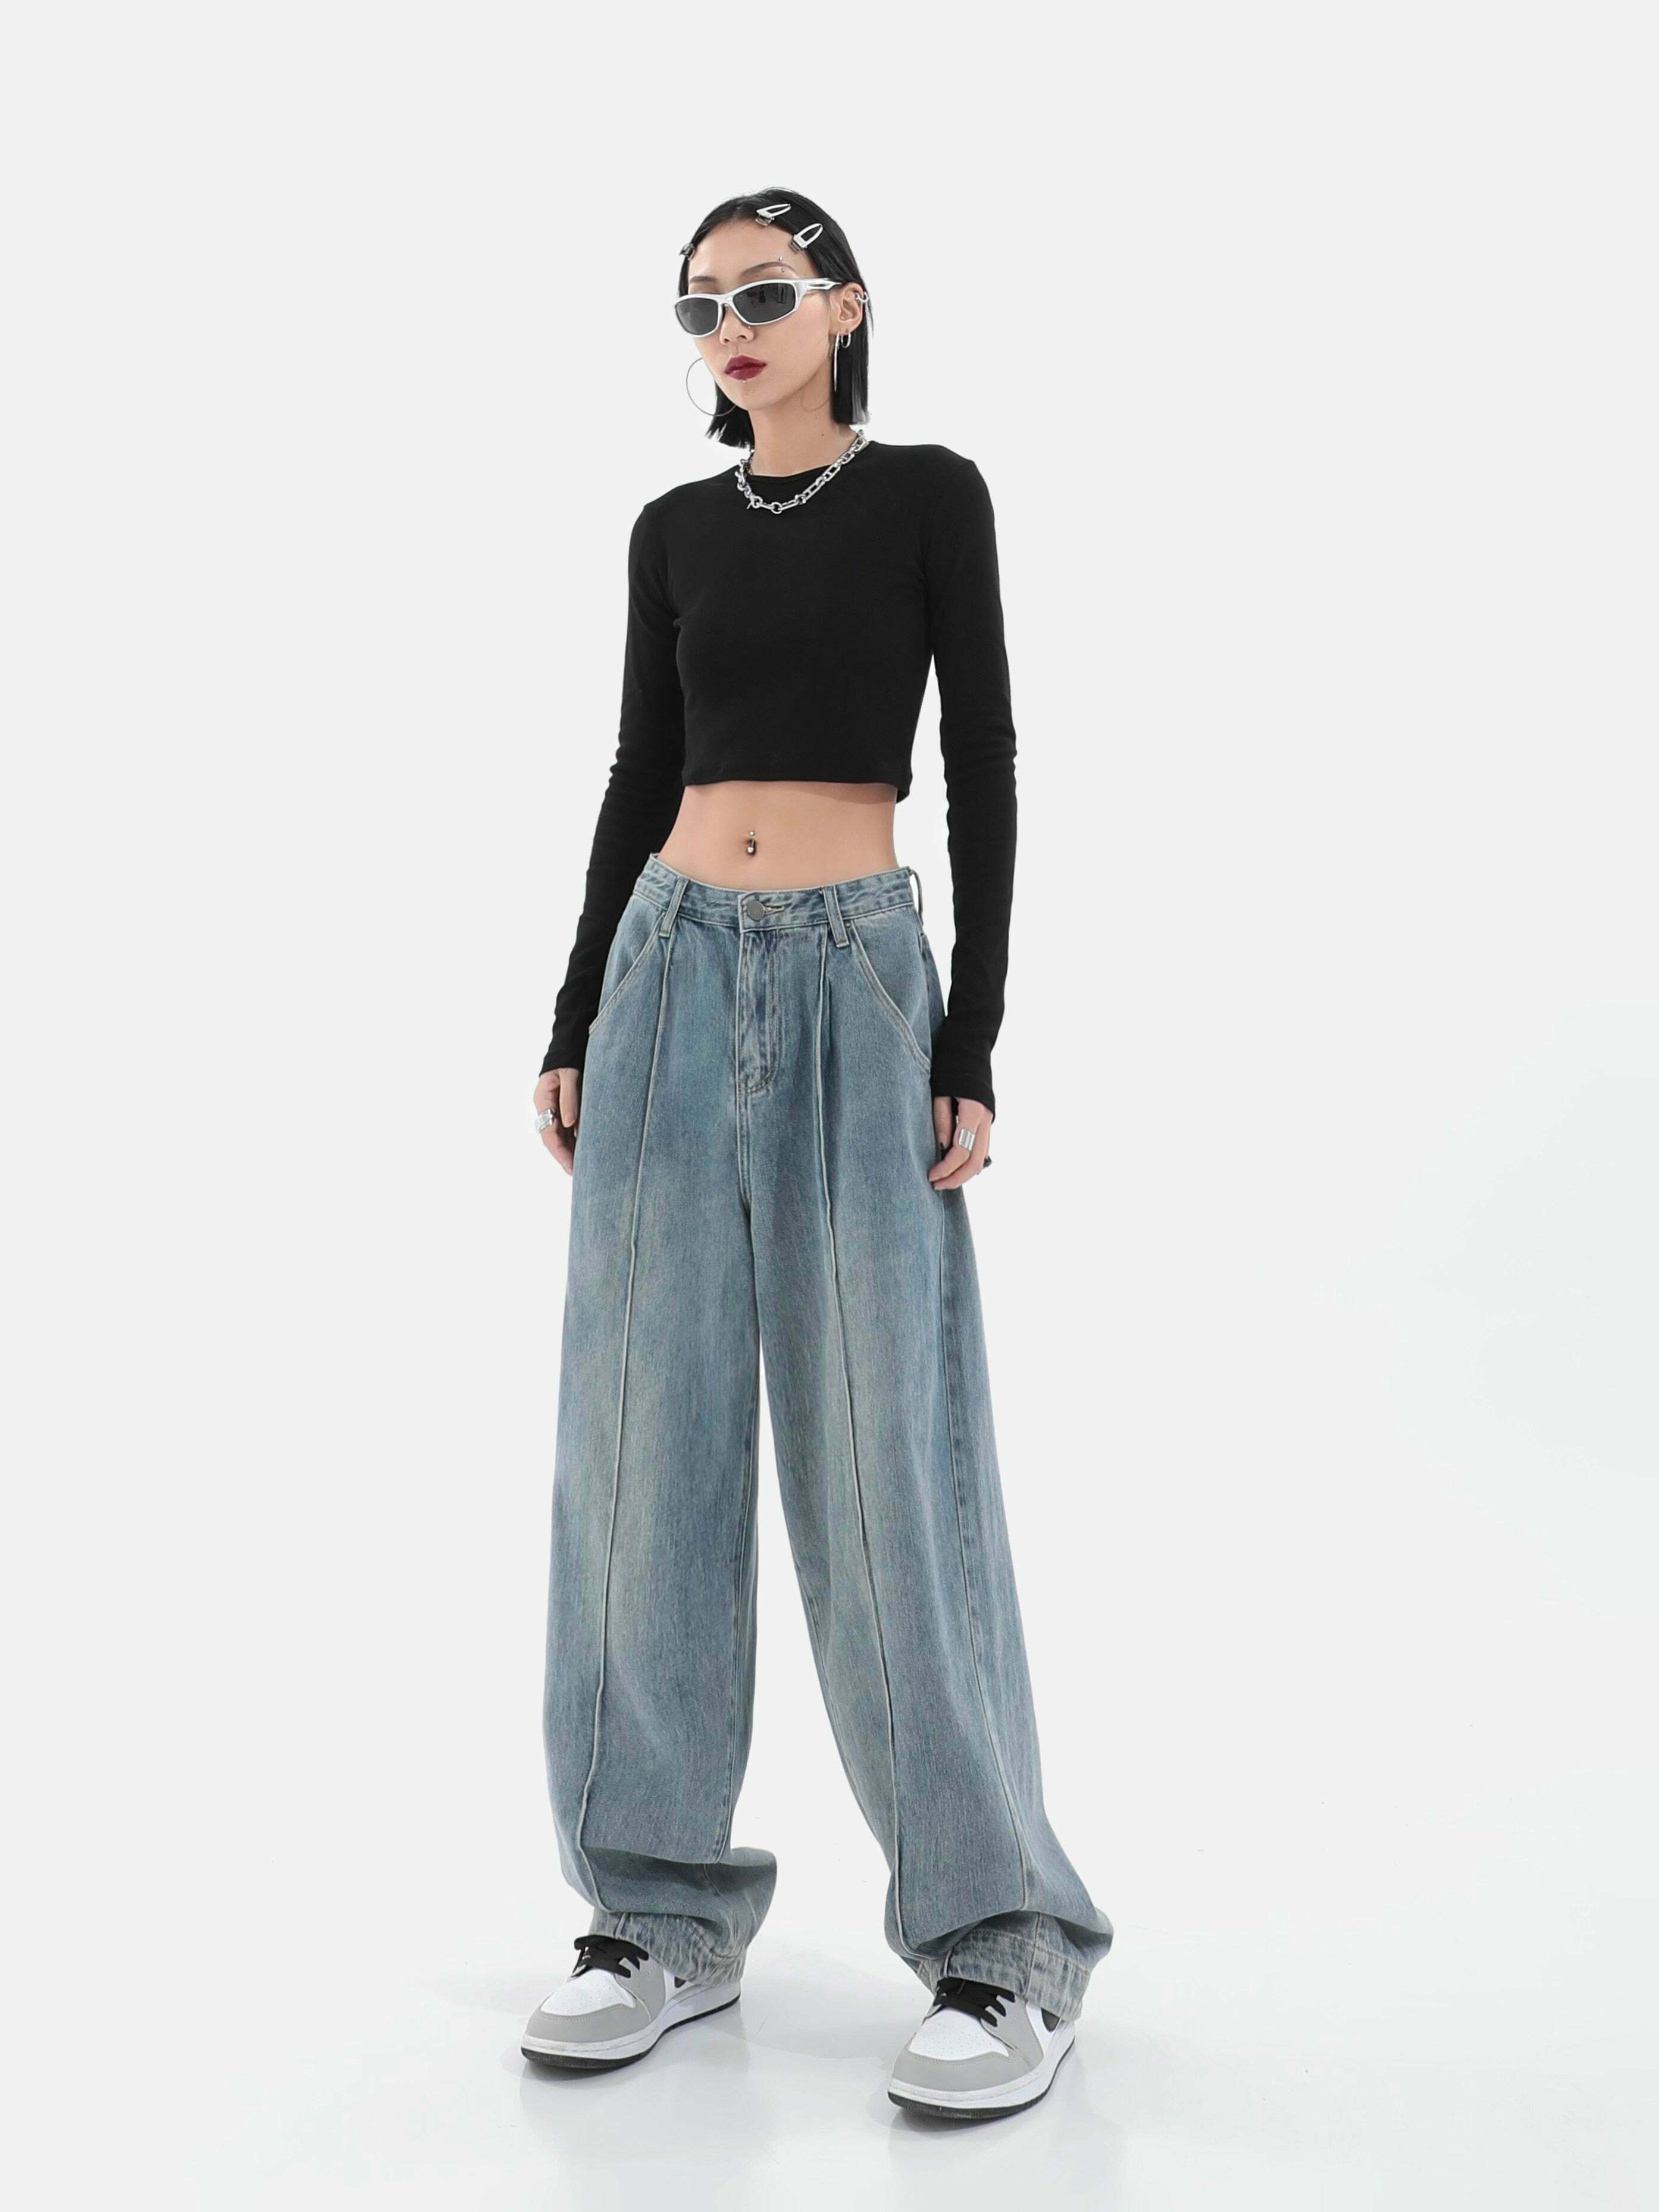 wideleg baggy denim pants urban chic & youthful style 4170